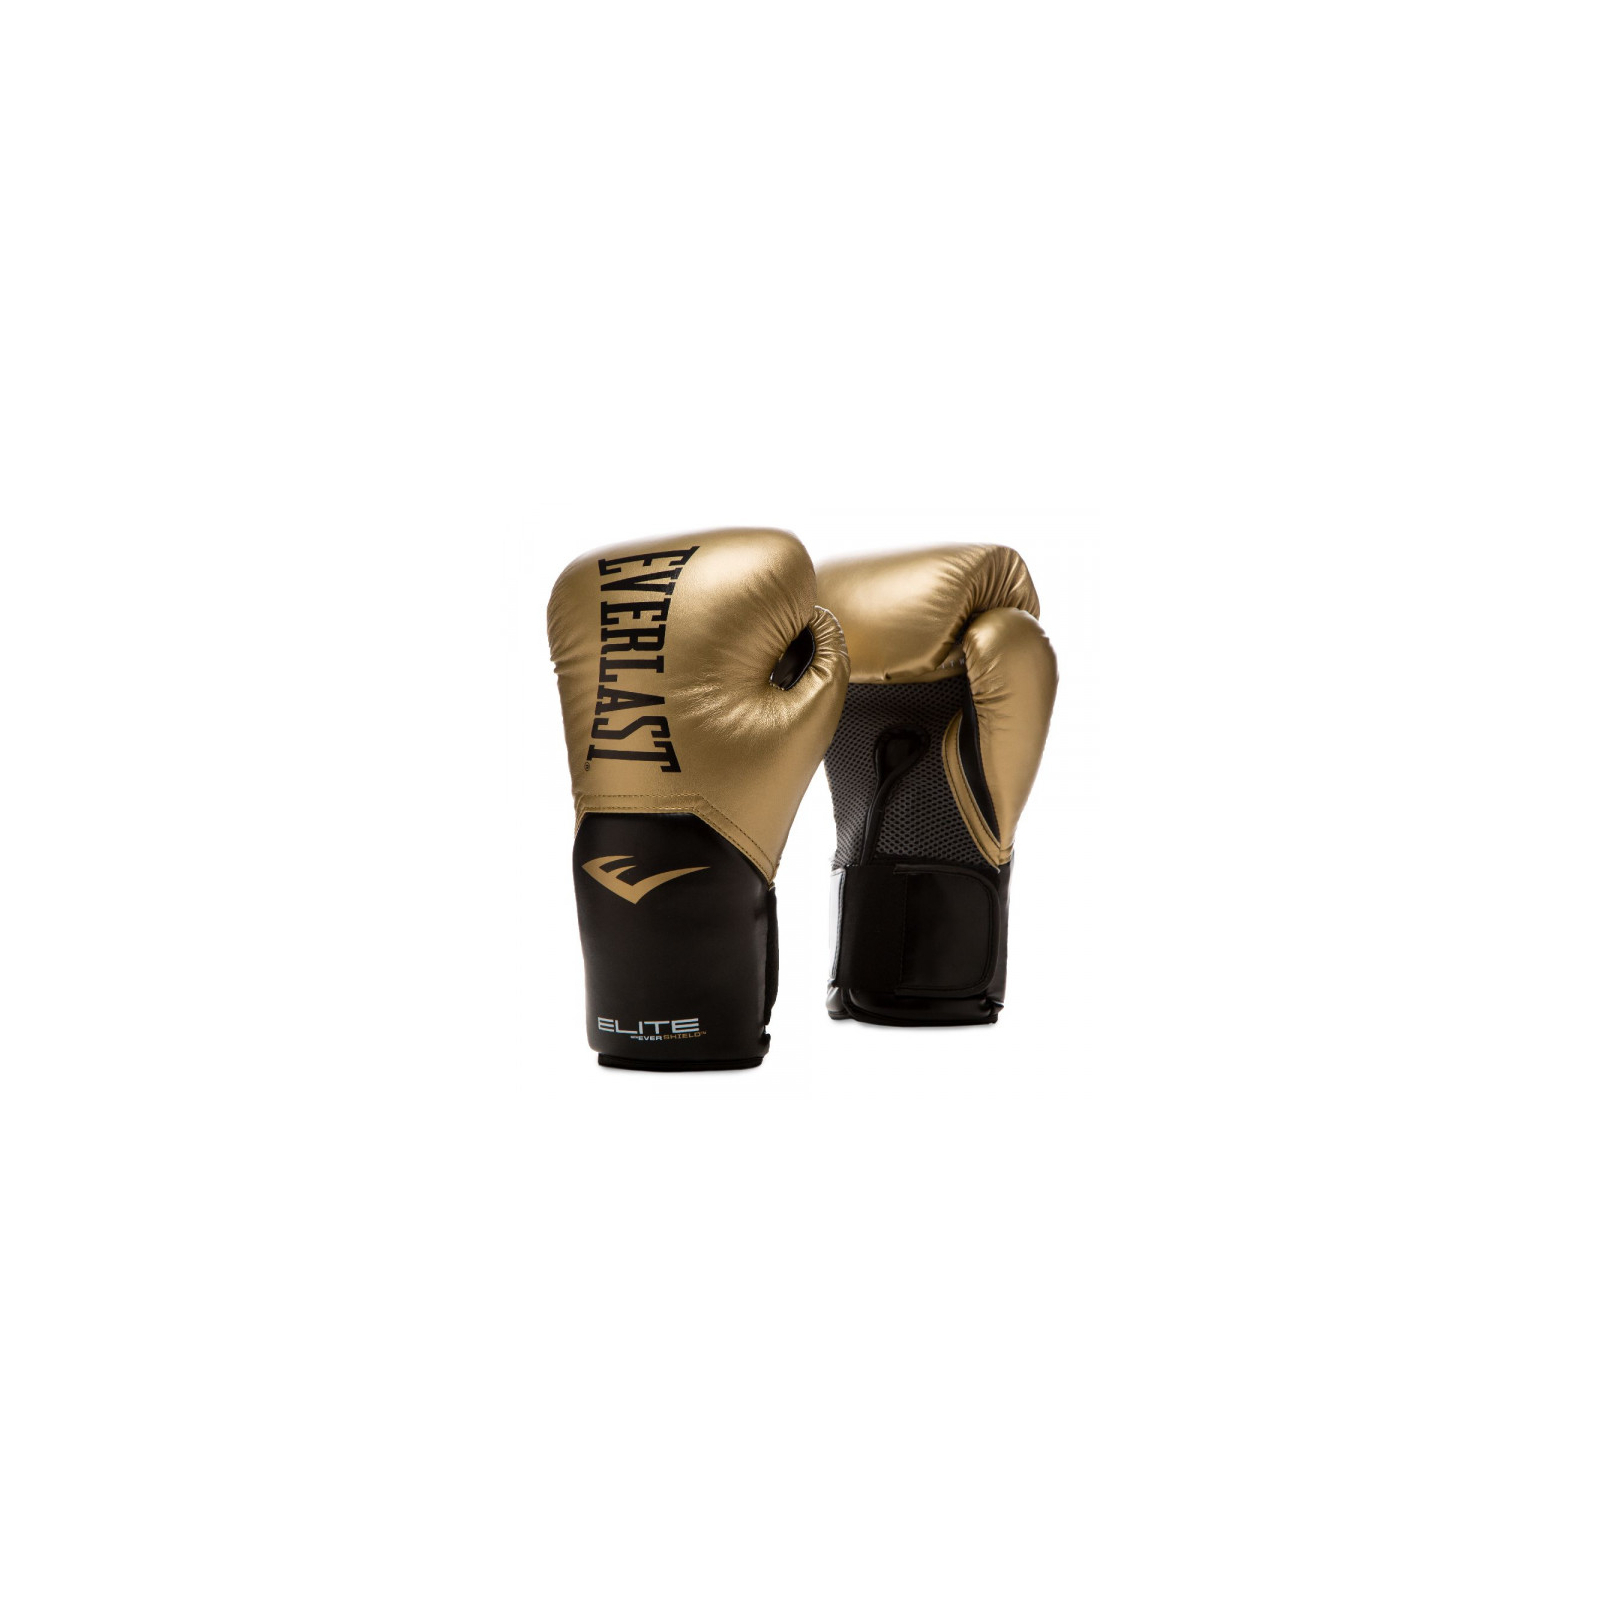 Боксерские перчатки Everlast Elite Training Gloves 870290-70-15 золотий 10 oz (009283608965)